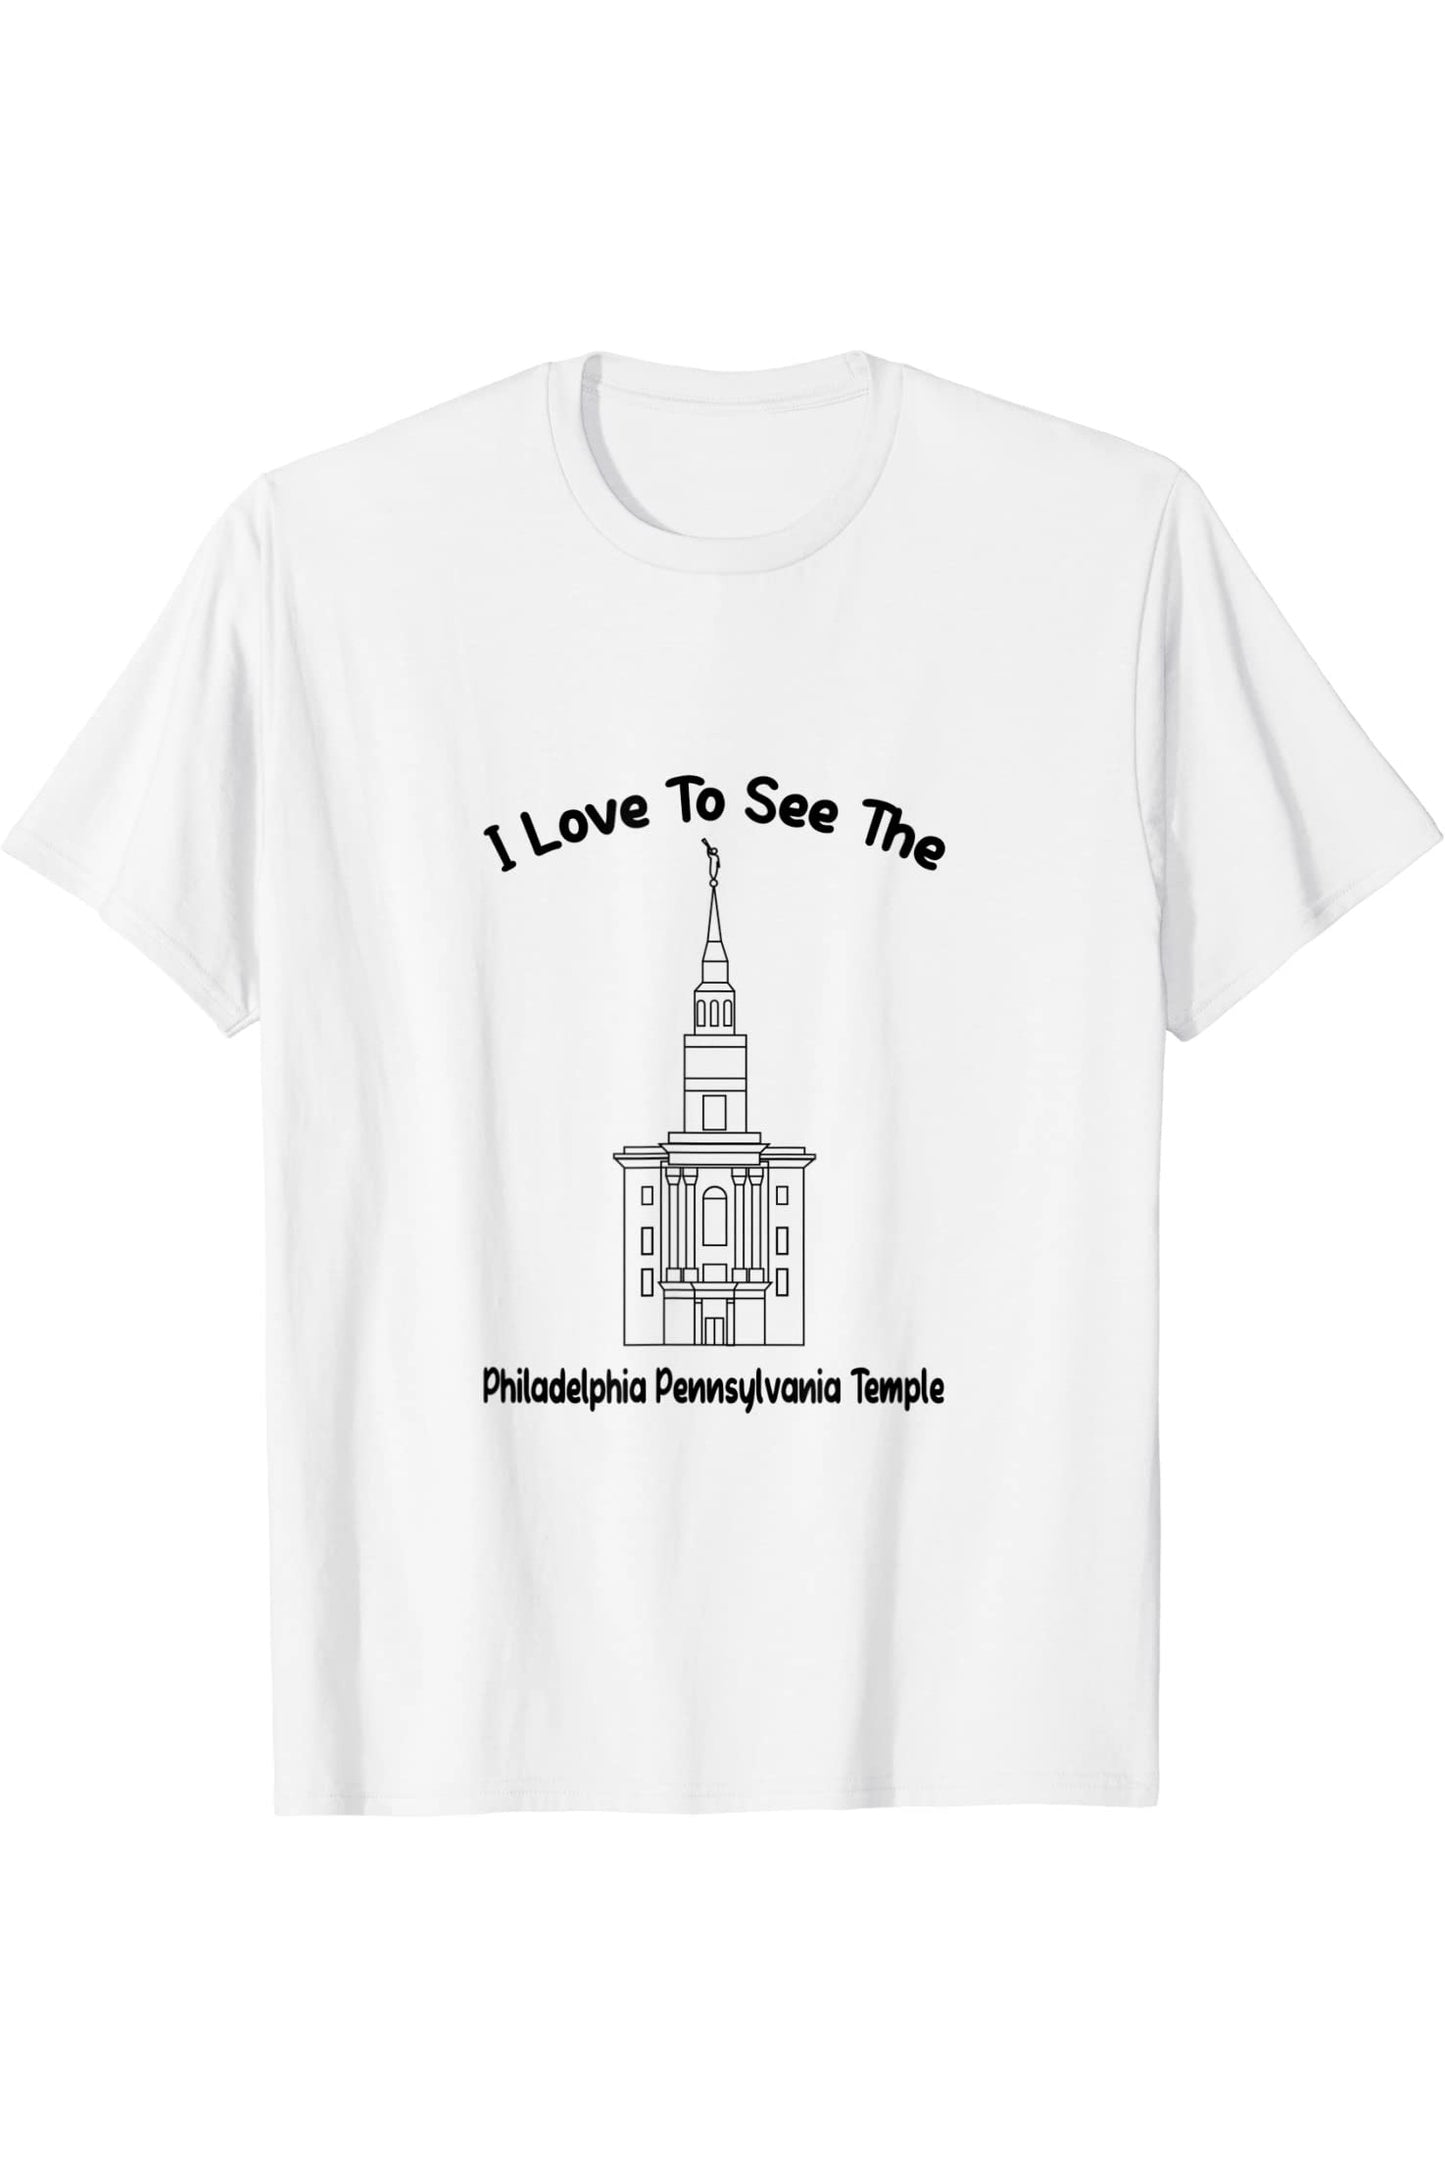 Philadelphia Pennsylvania Temple T-Shirt - Primary Style (English) US